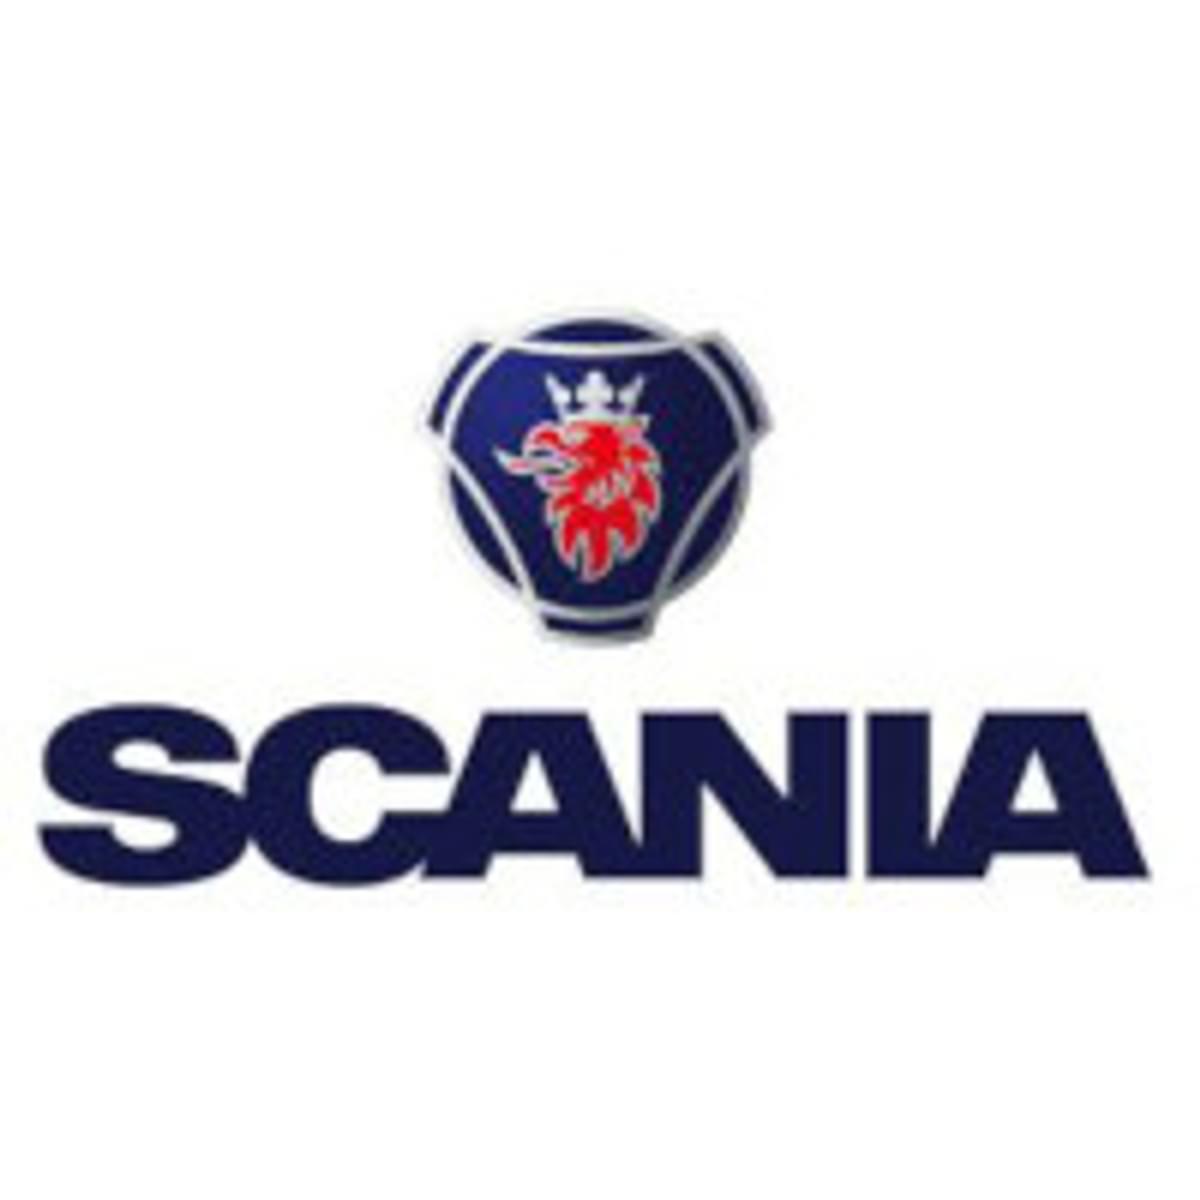 Scania legt productie stil door chiptekort image